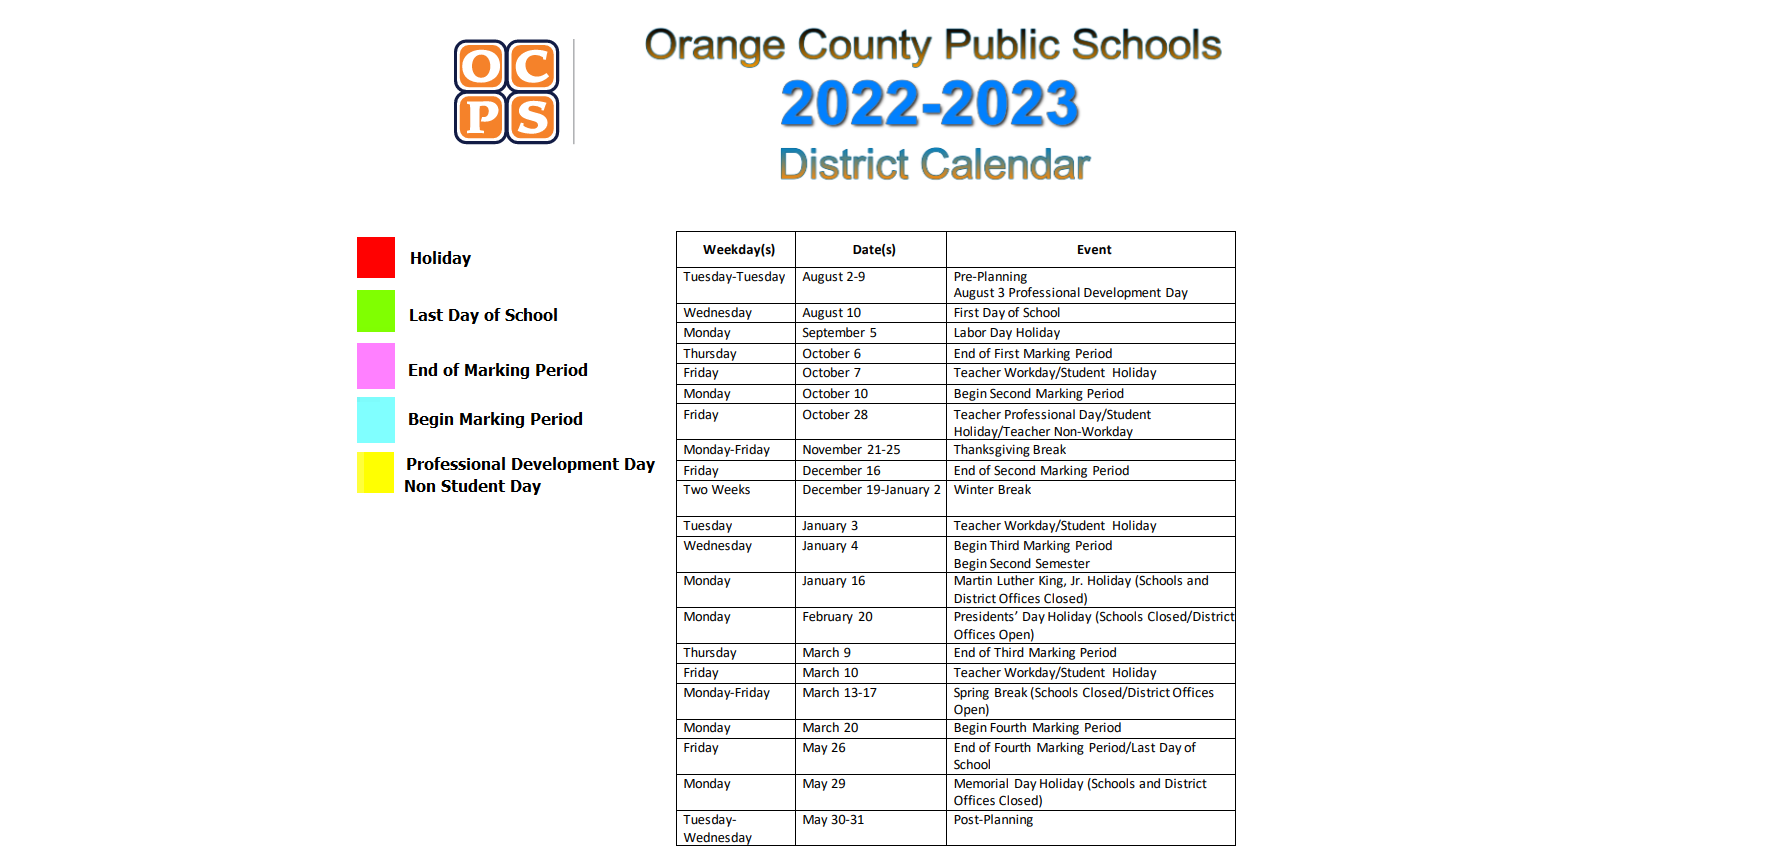 District School Academic Calendar Key for Atc/ghh